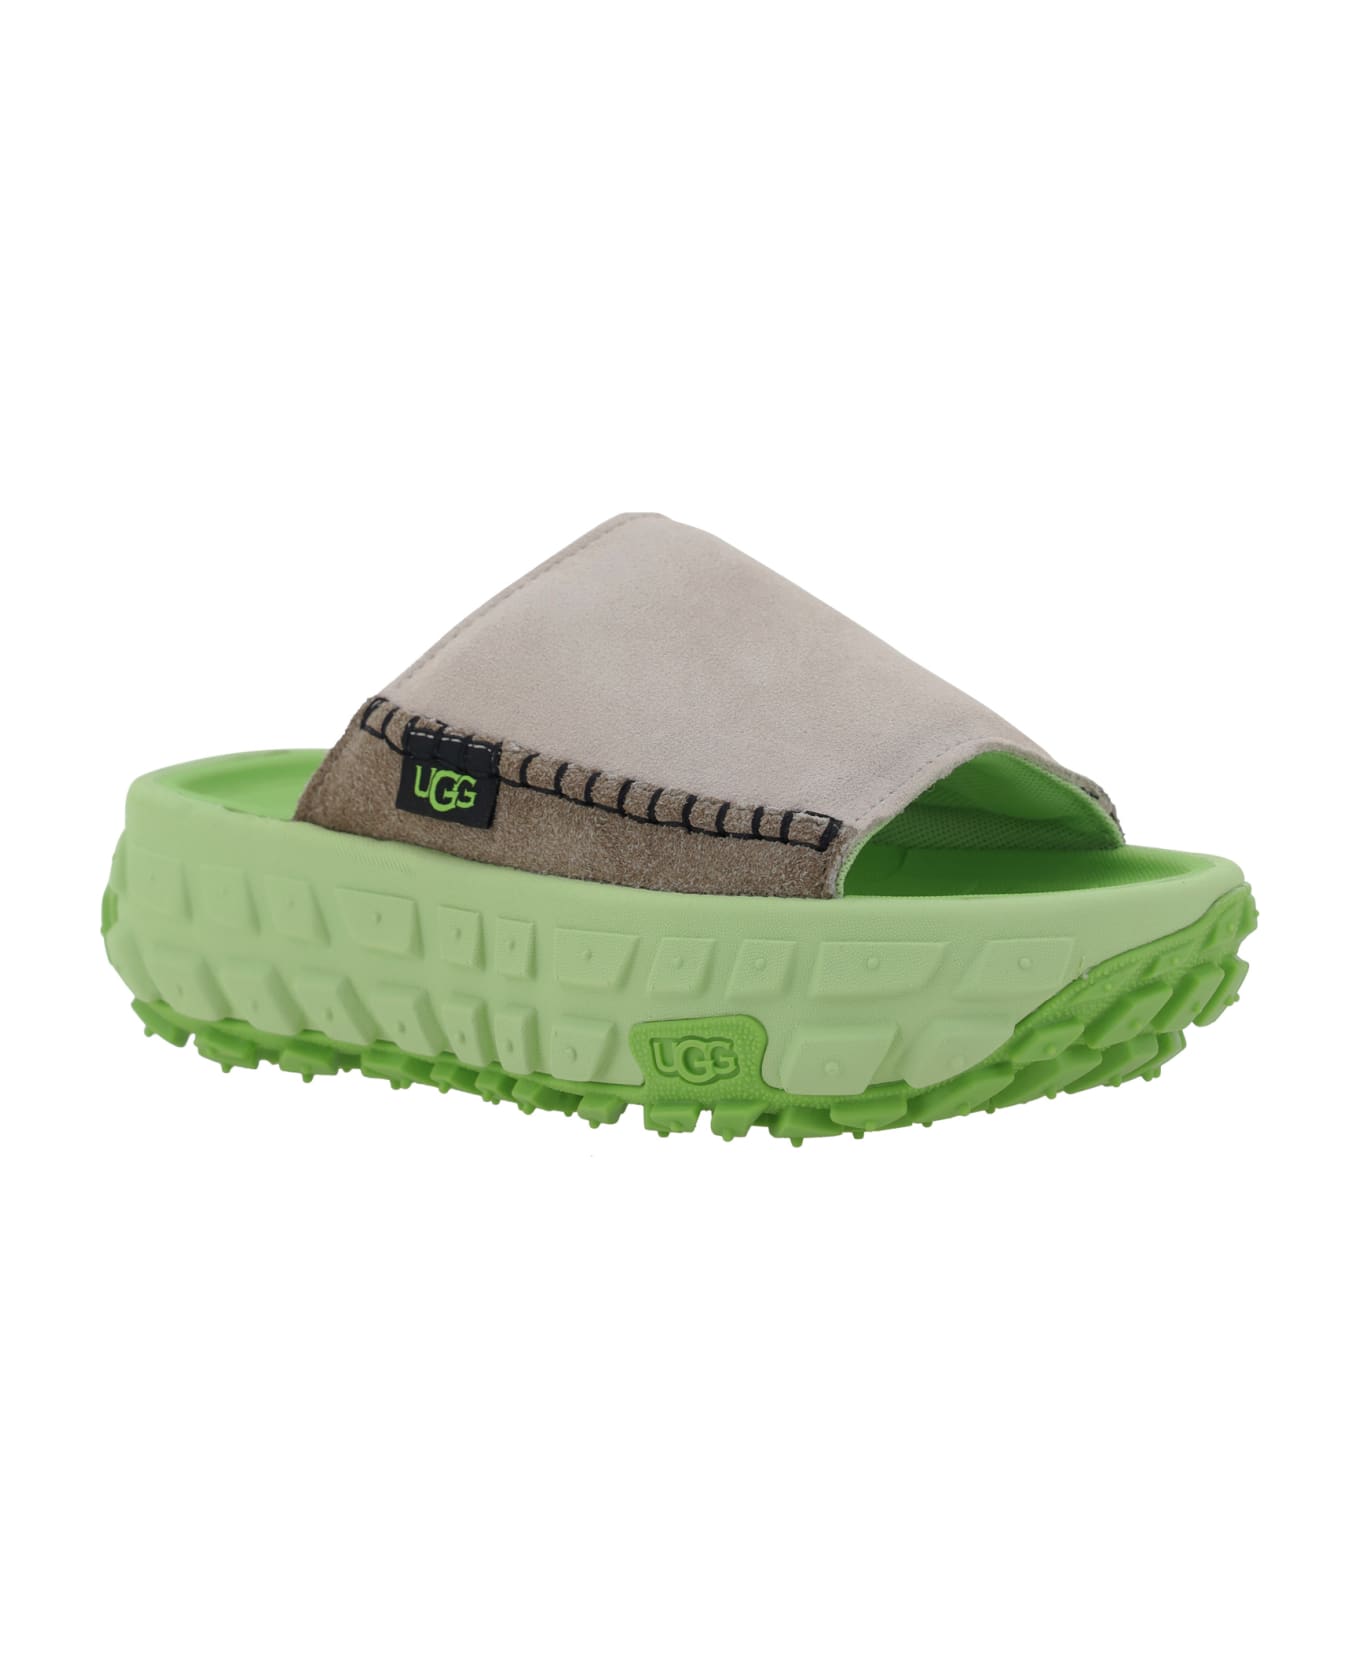 UGG Venture Daze Sandals - Cct Ceramic / Caterpillar